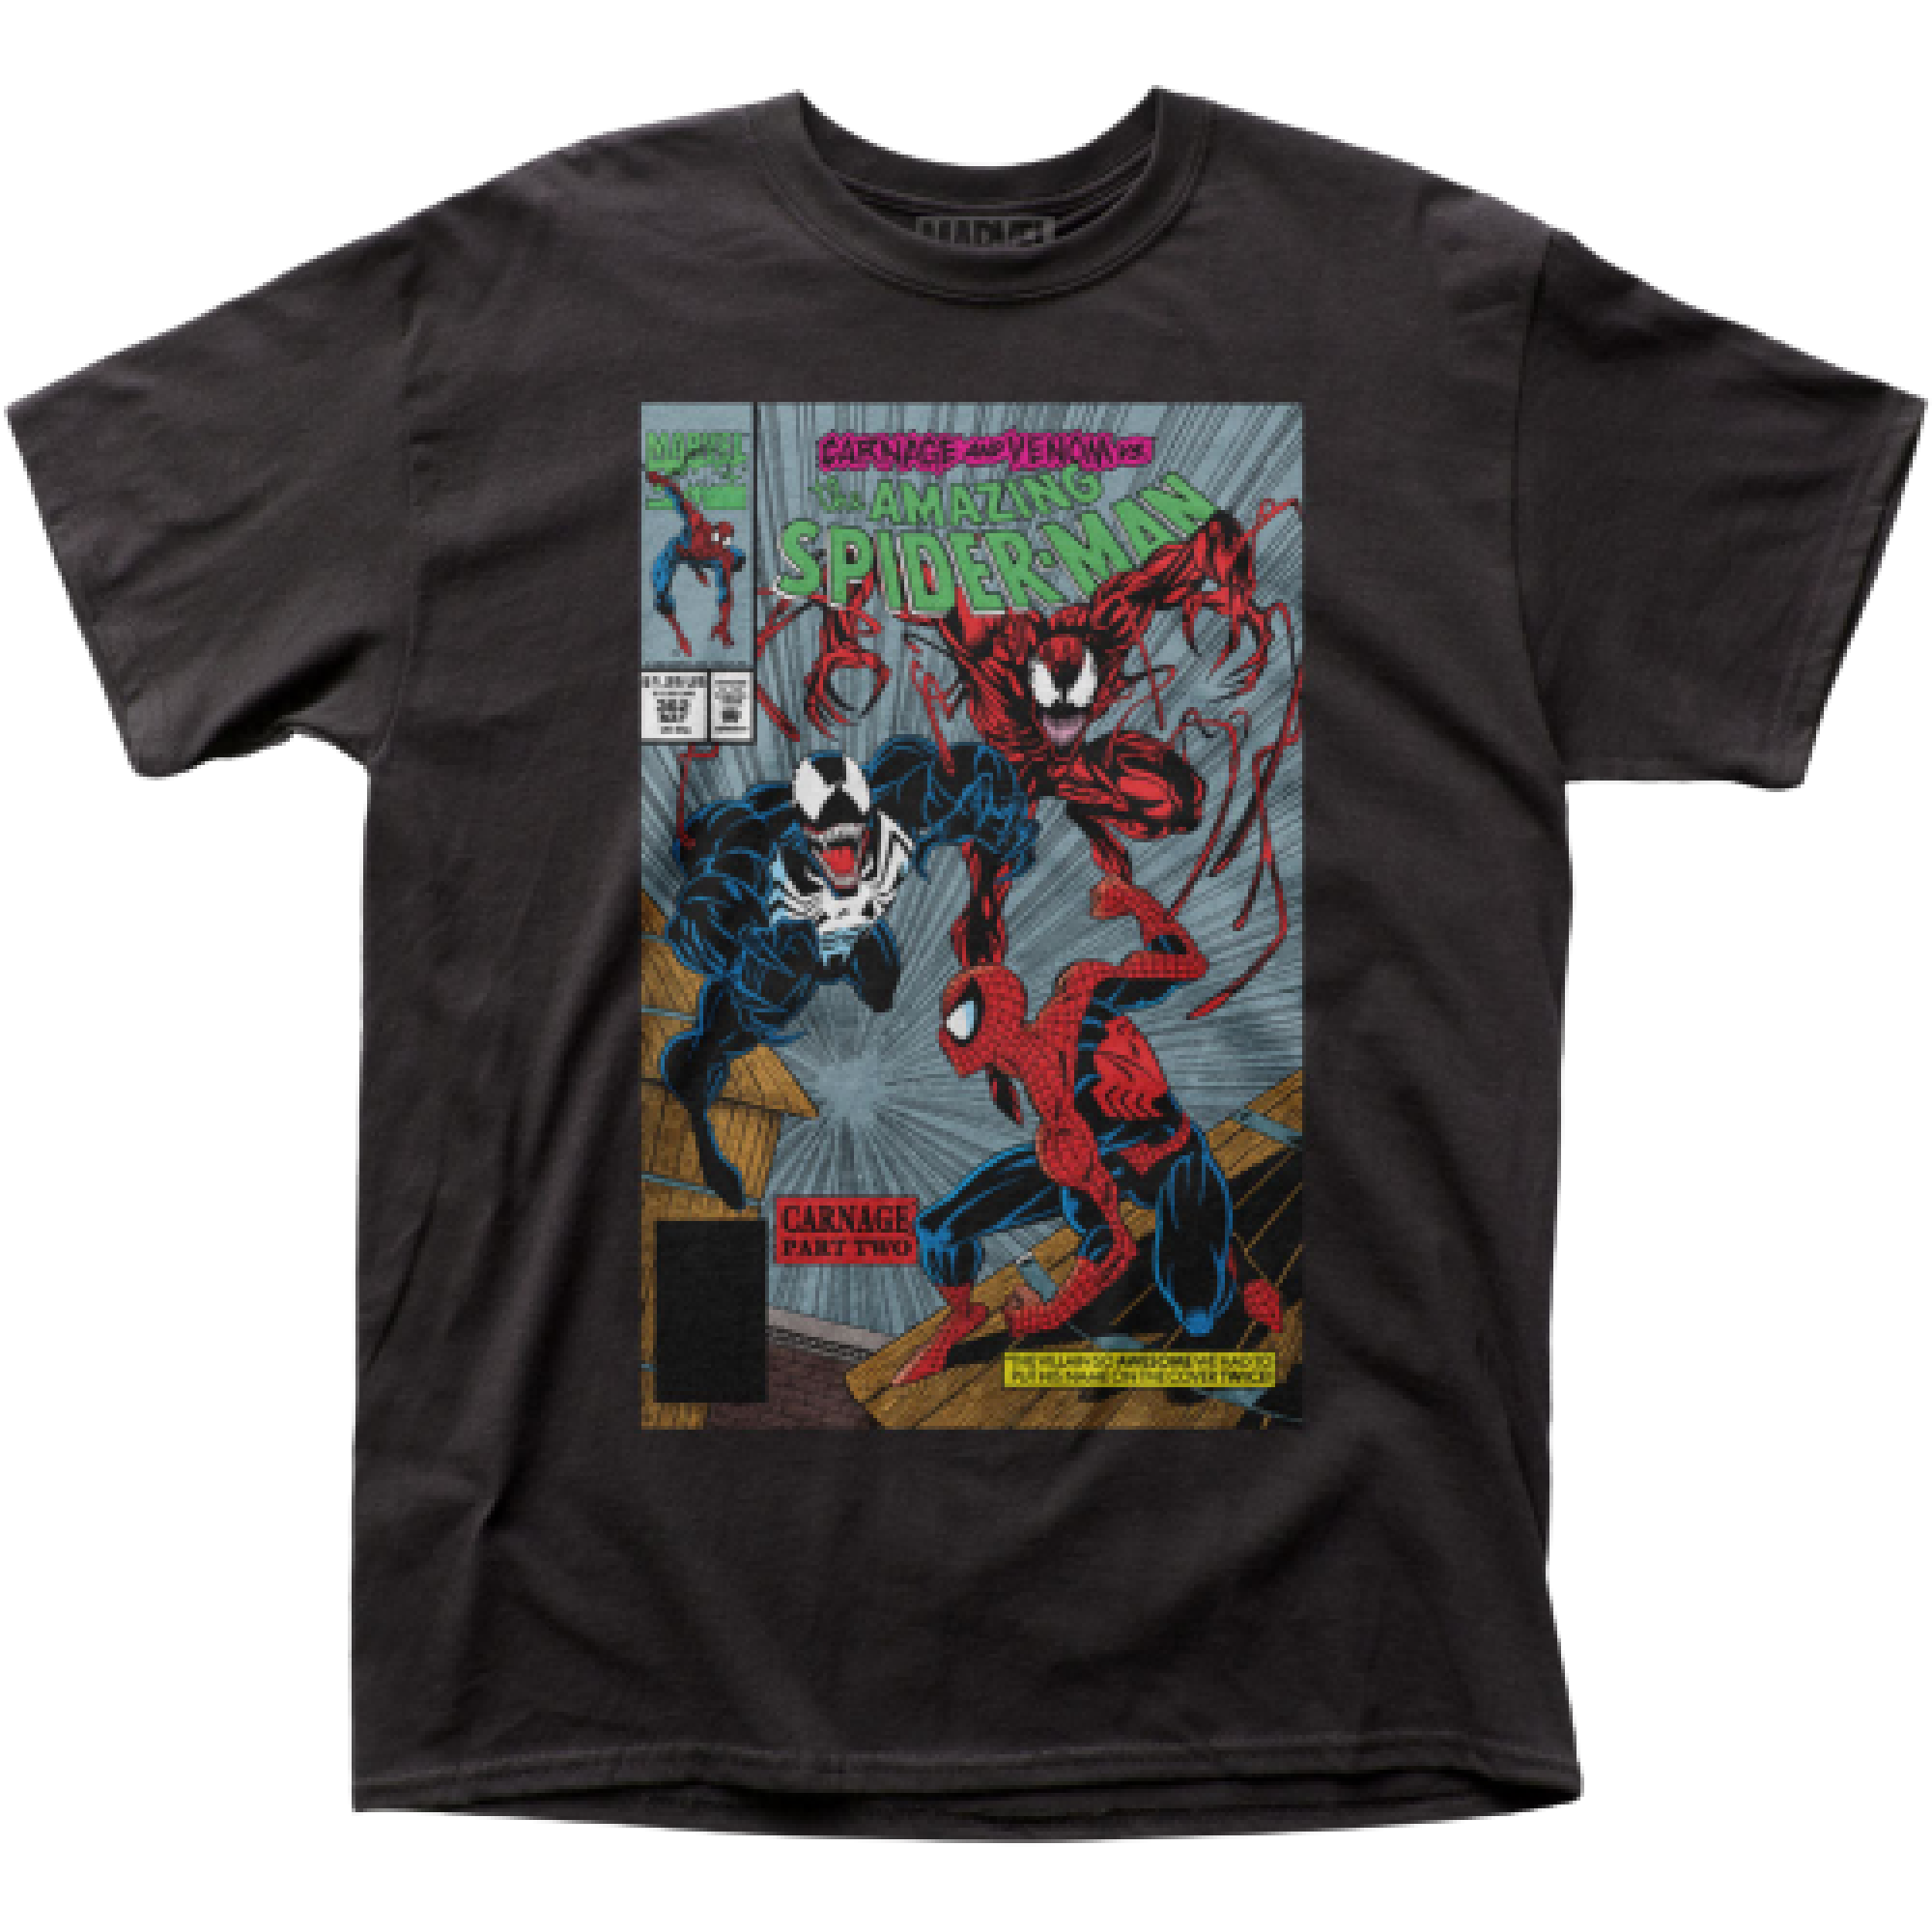 Spider-Man Venom vs Carnage Comic Cover Part Two T-Shirt Medium 